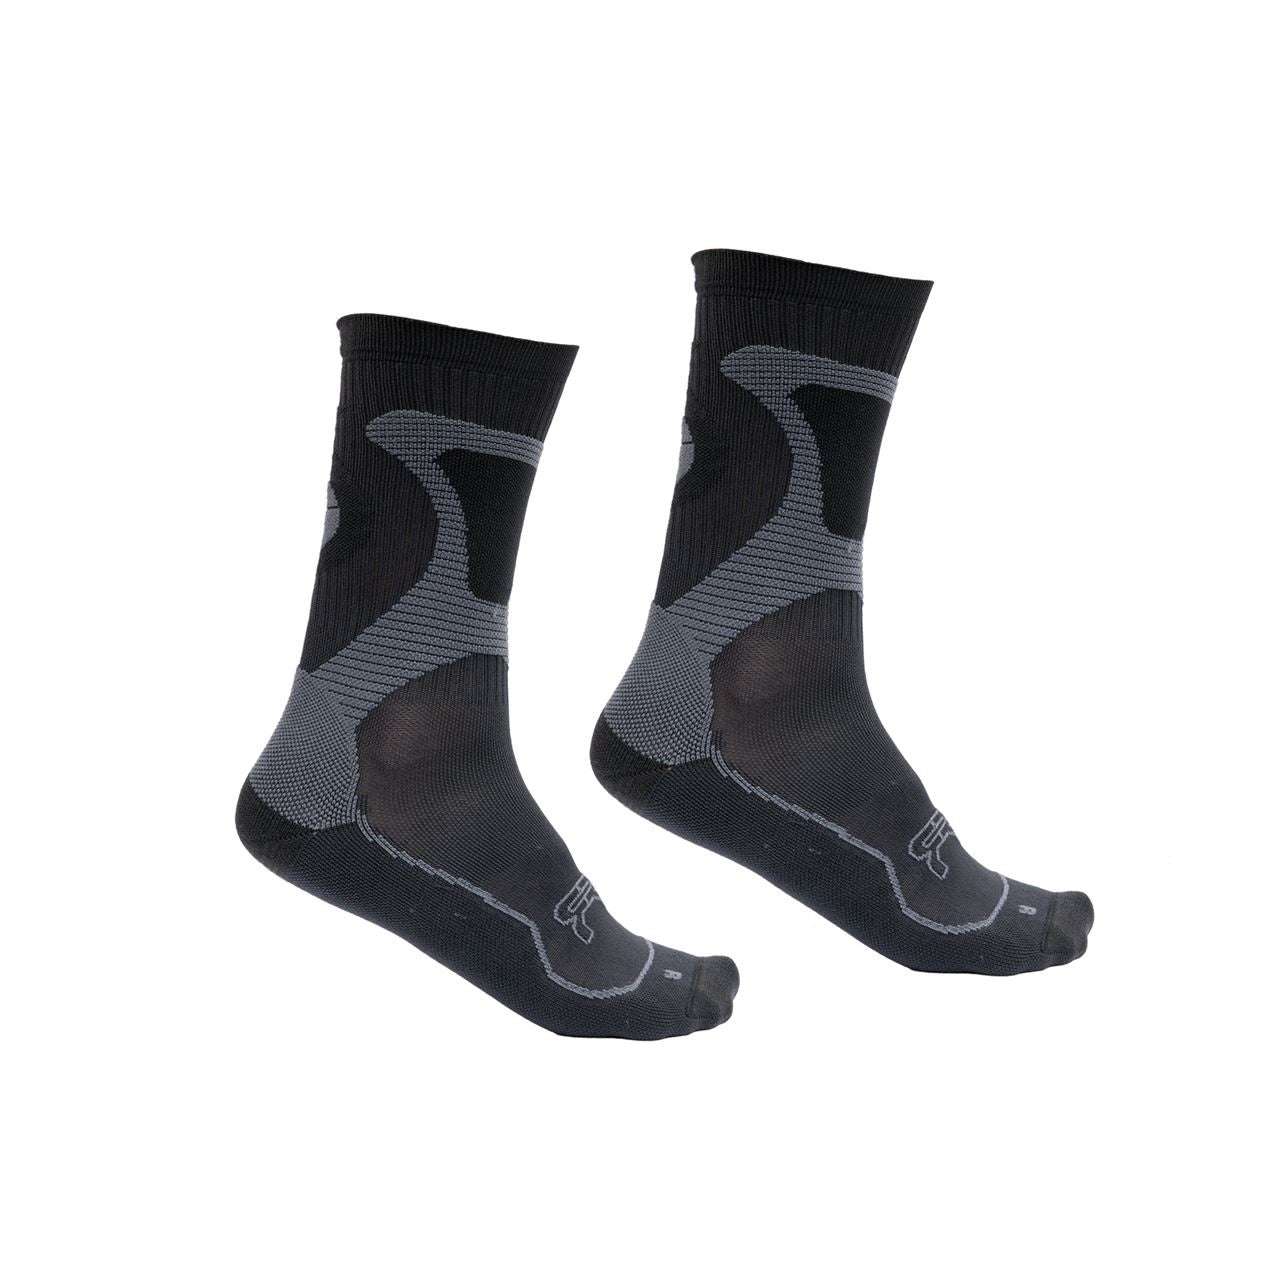 FR Nano Sports Socks - Black/Grey